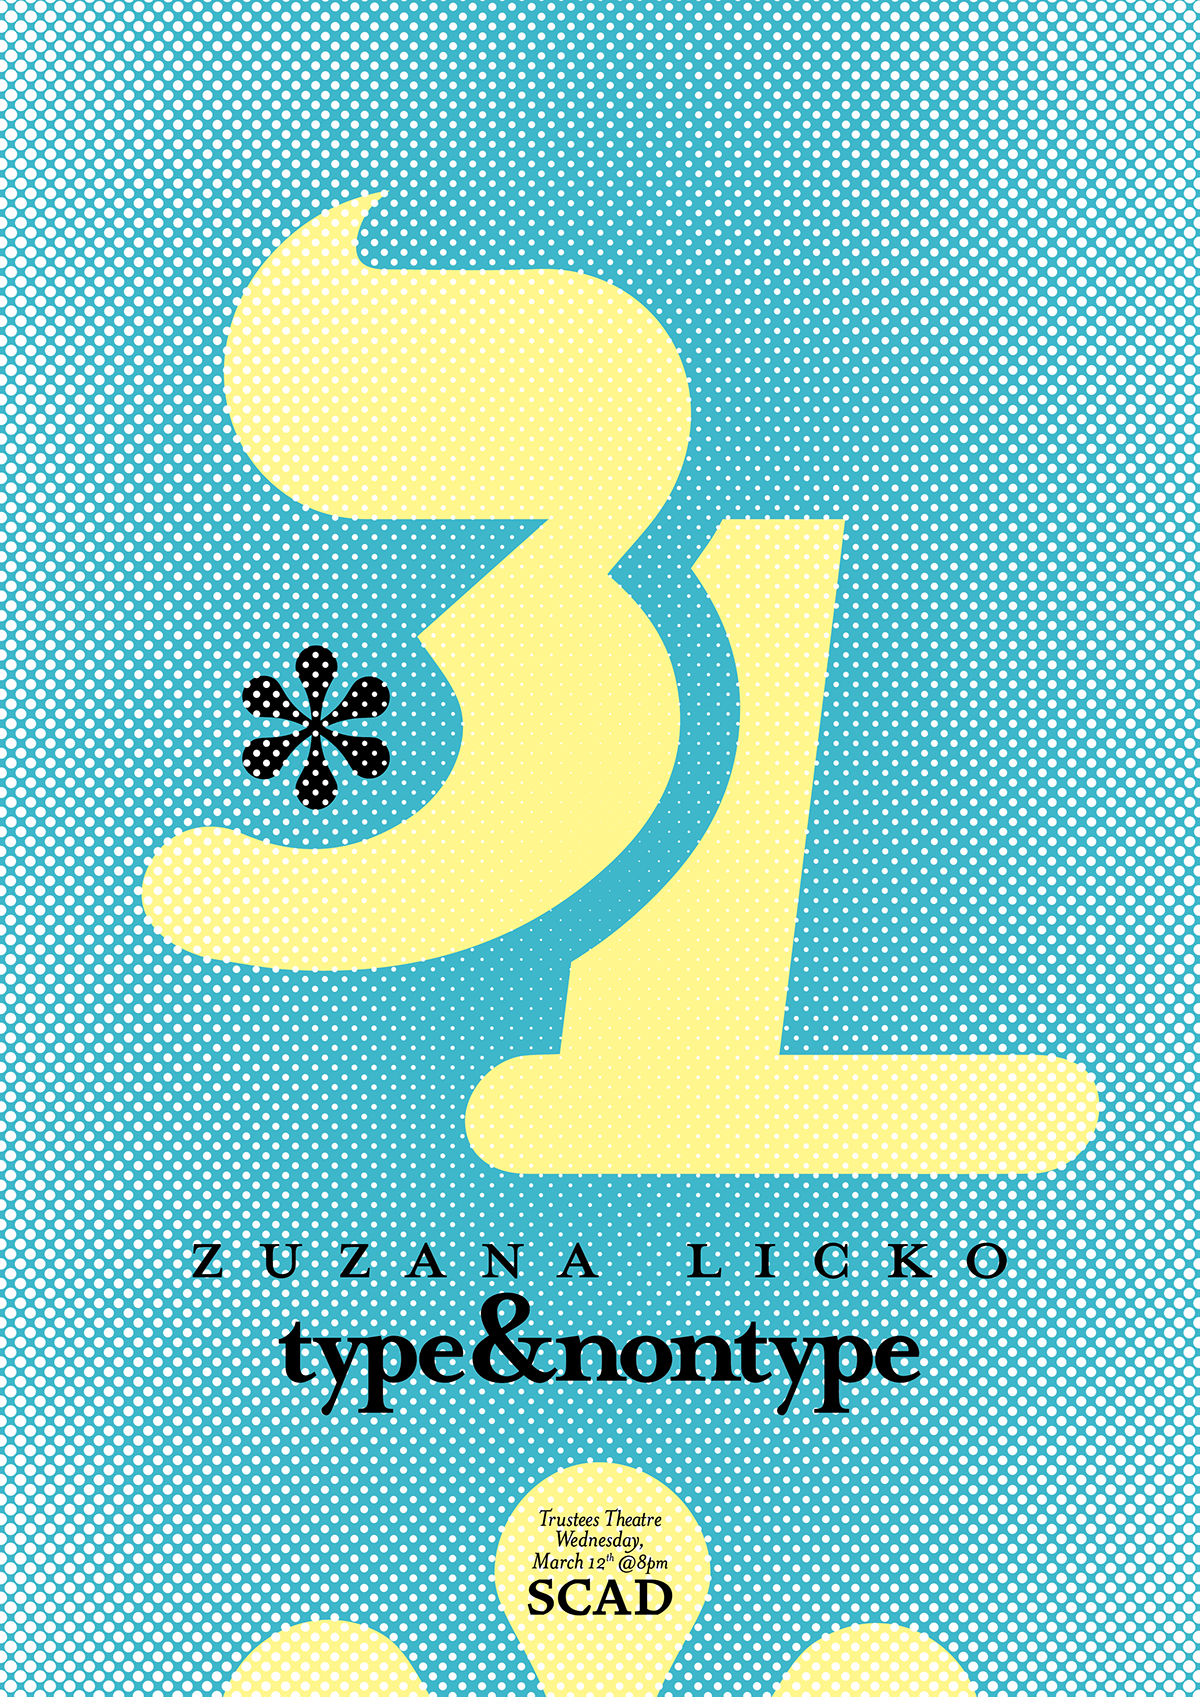 Booklet type Type 1 Typography 1 graphic Zuzana Licko licko zuzana type design designer type designer puzzler Dogma Mrs. Eaves woodward